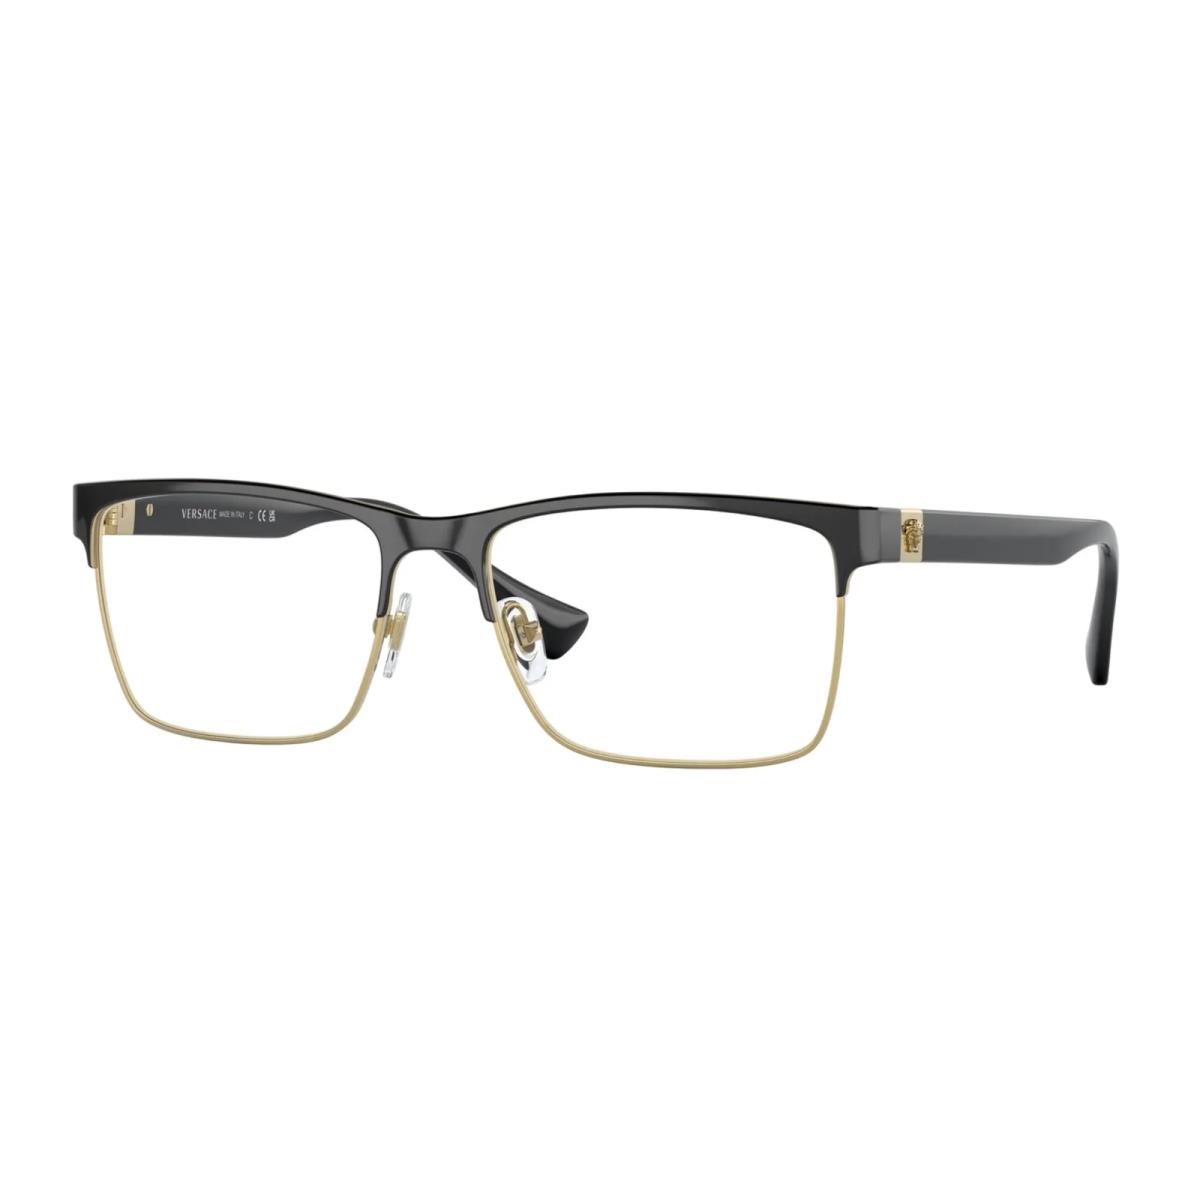 Versace Rx-able Eyeglasses Mod. 1285 1443 56-17 150 Black Gold Frames